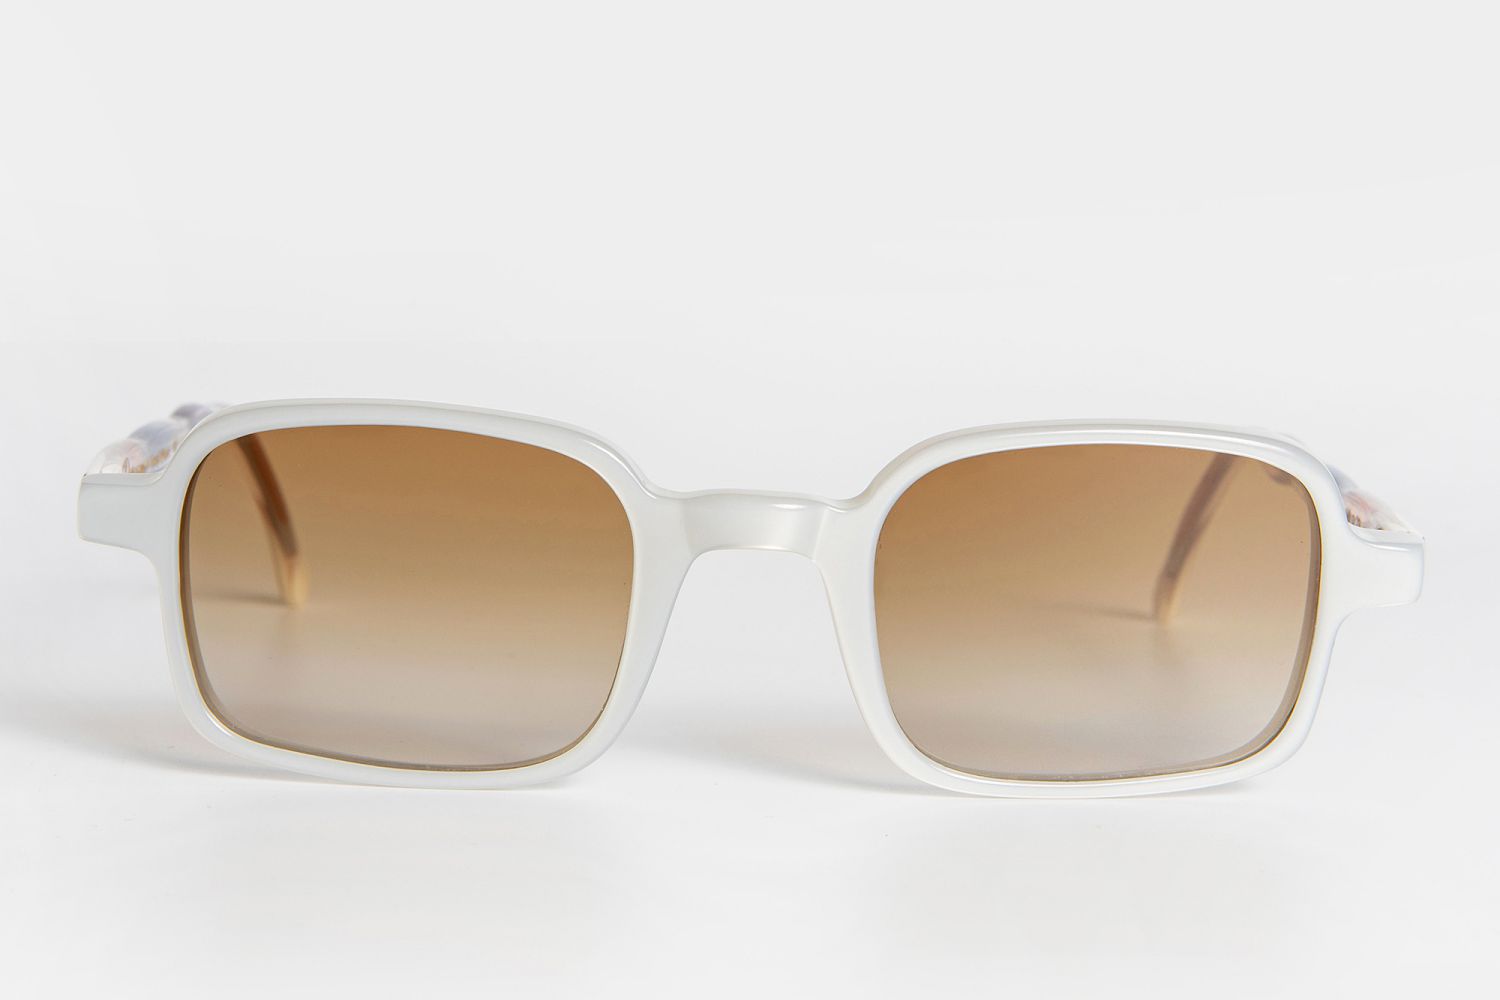 Malta Design Sunglasses